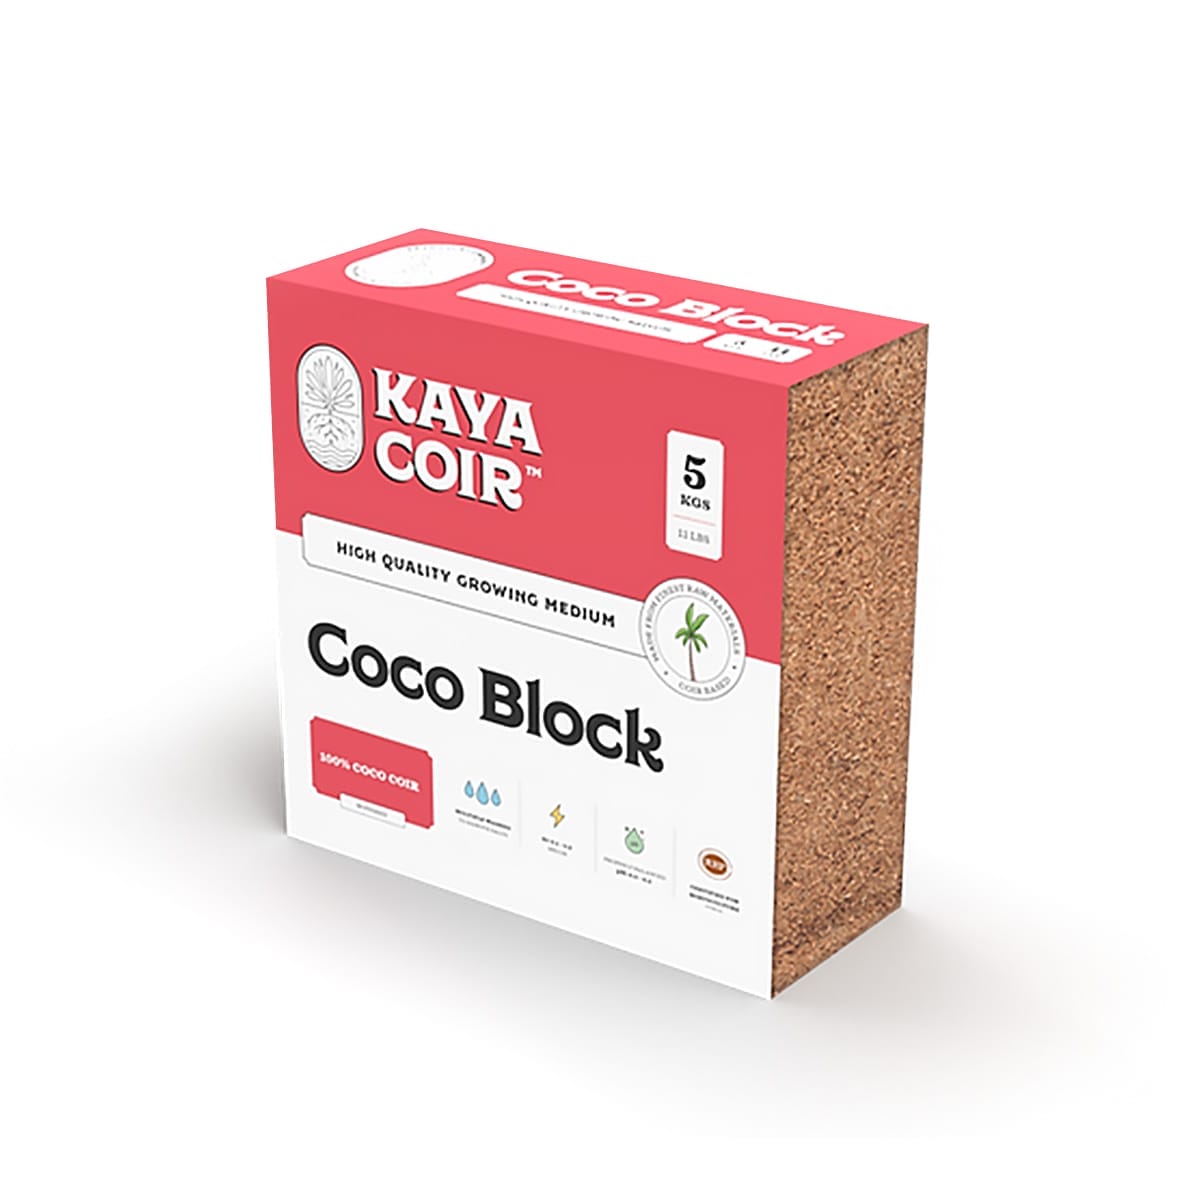 Kaya Coir Coco Block 5kg